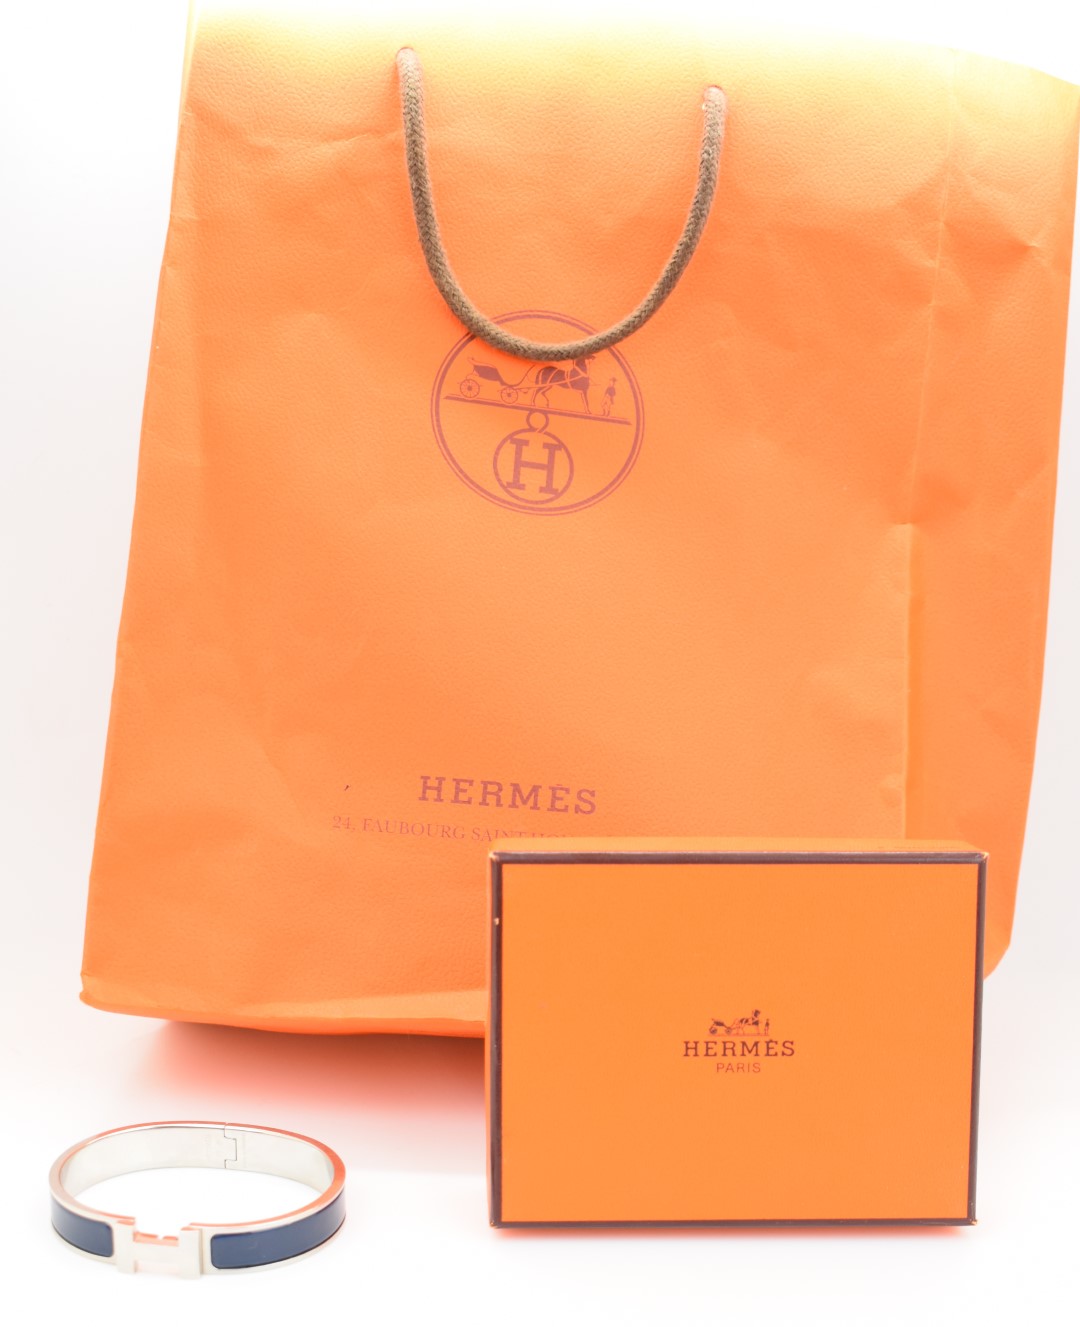 Hermès bangle set with navy enamel, with original box and bag - Image 5 of 5